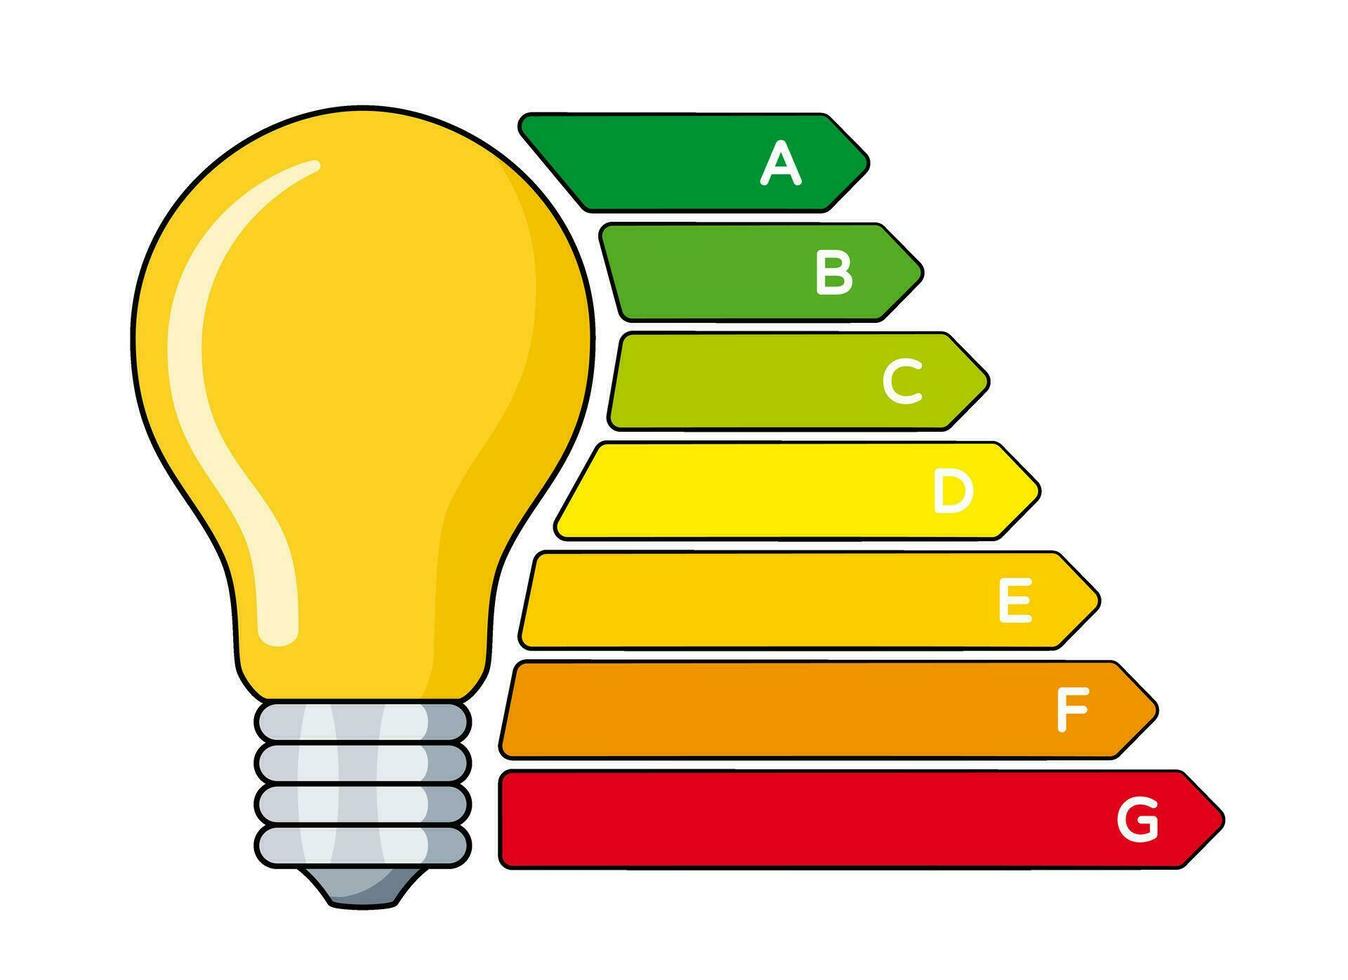 ligero bulbo con energía eficiencia clases europeo Unión energía etiqueta. dibujos animados vector